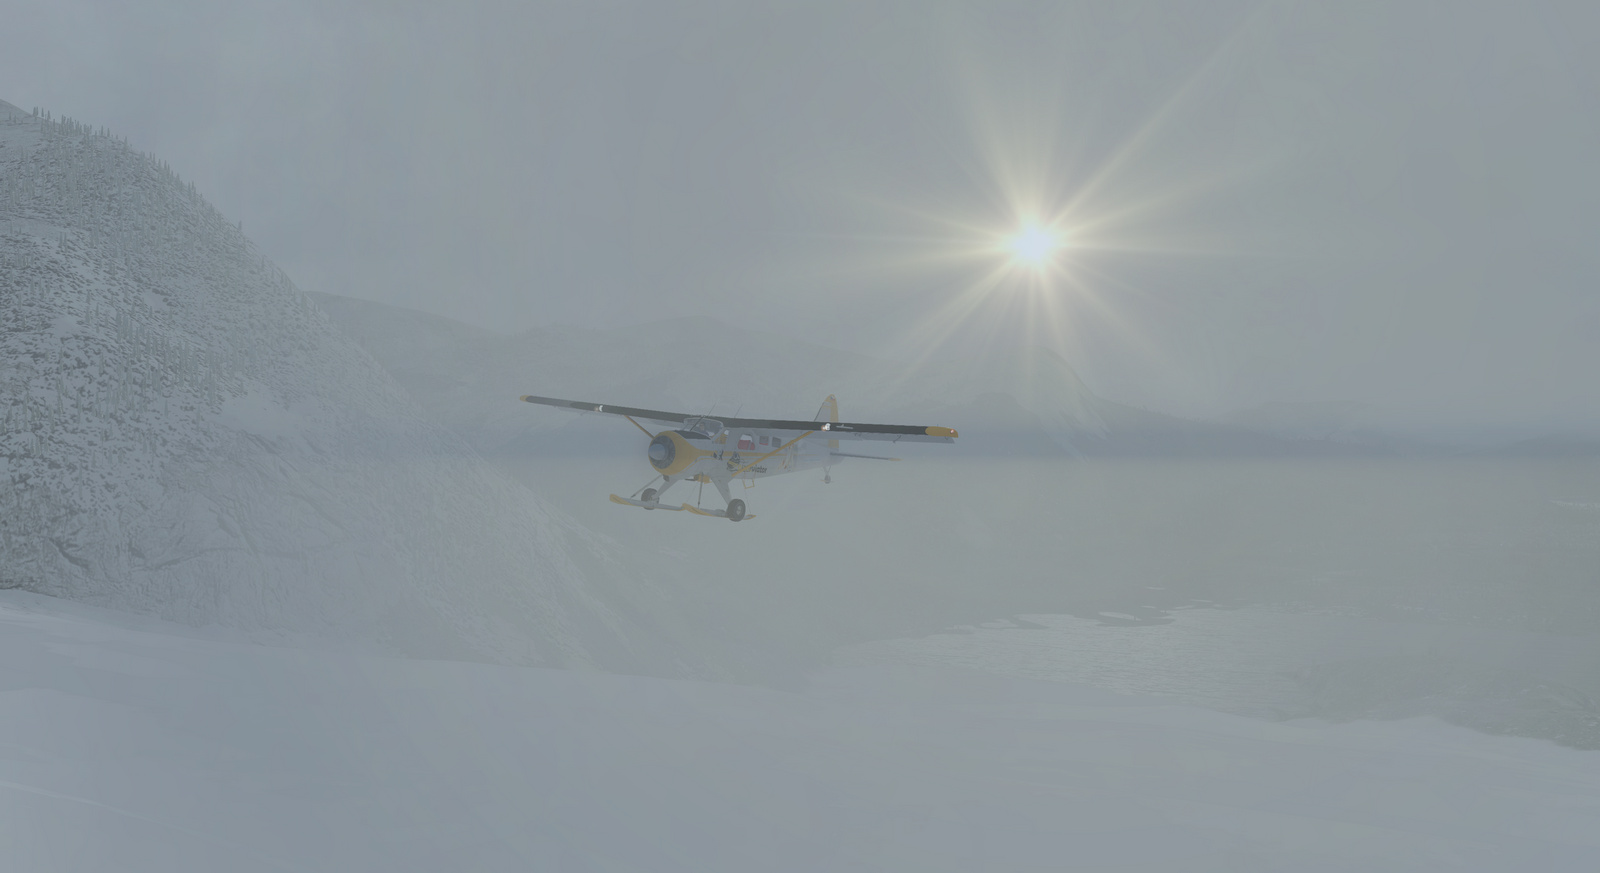 DHC-2 Beaver, Mouseviator,Skis version, Screenshot 16/19